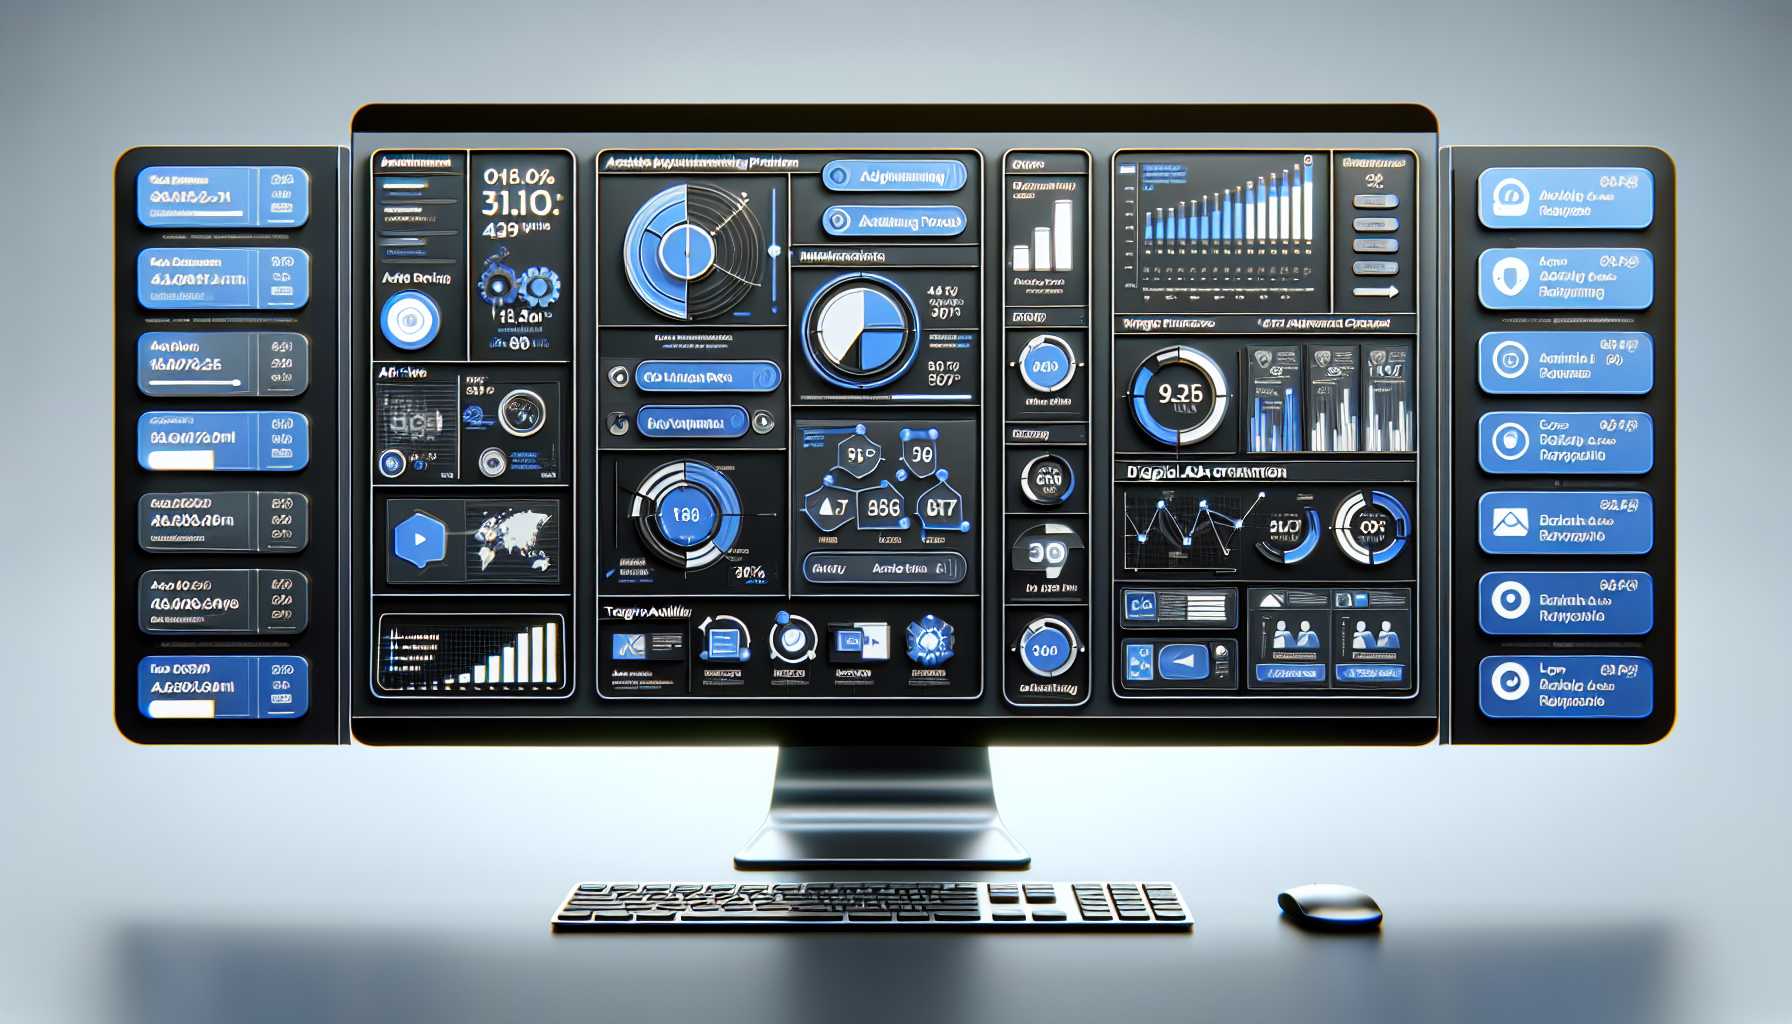 digital advertising platform interface on a computer screen